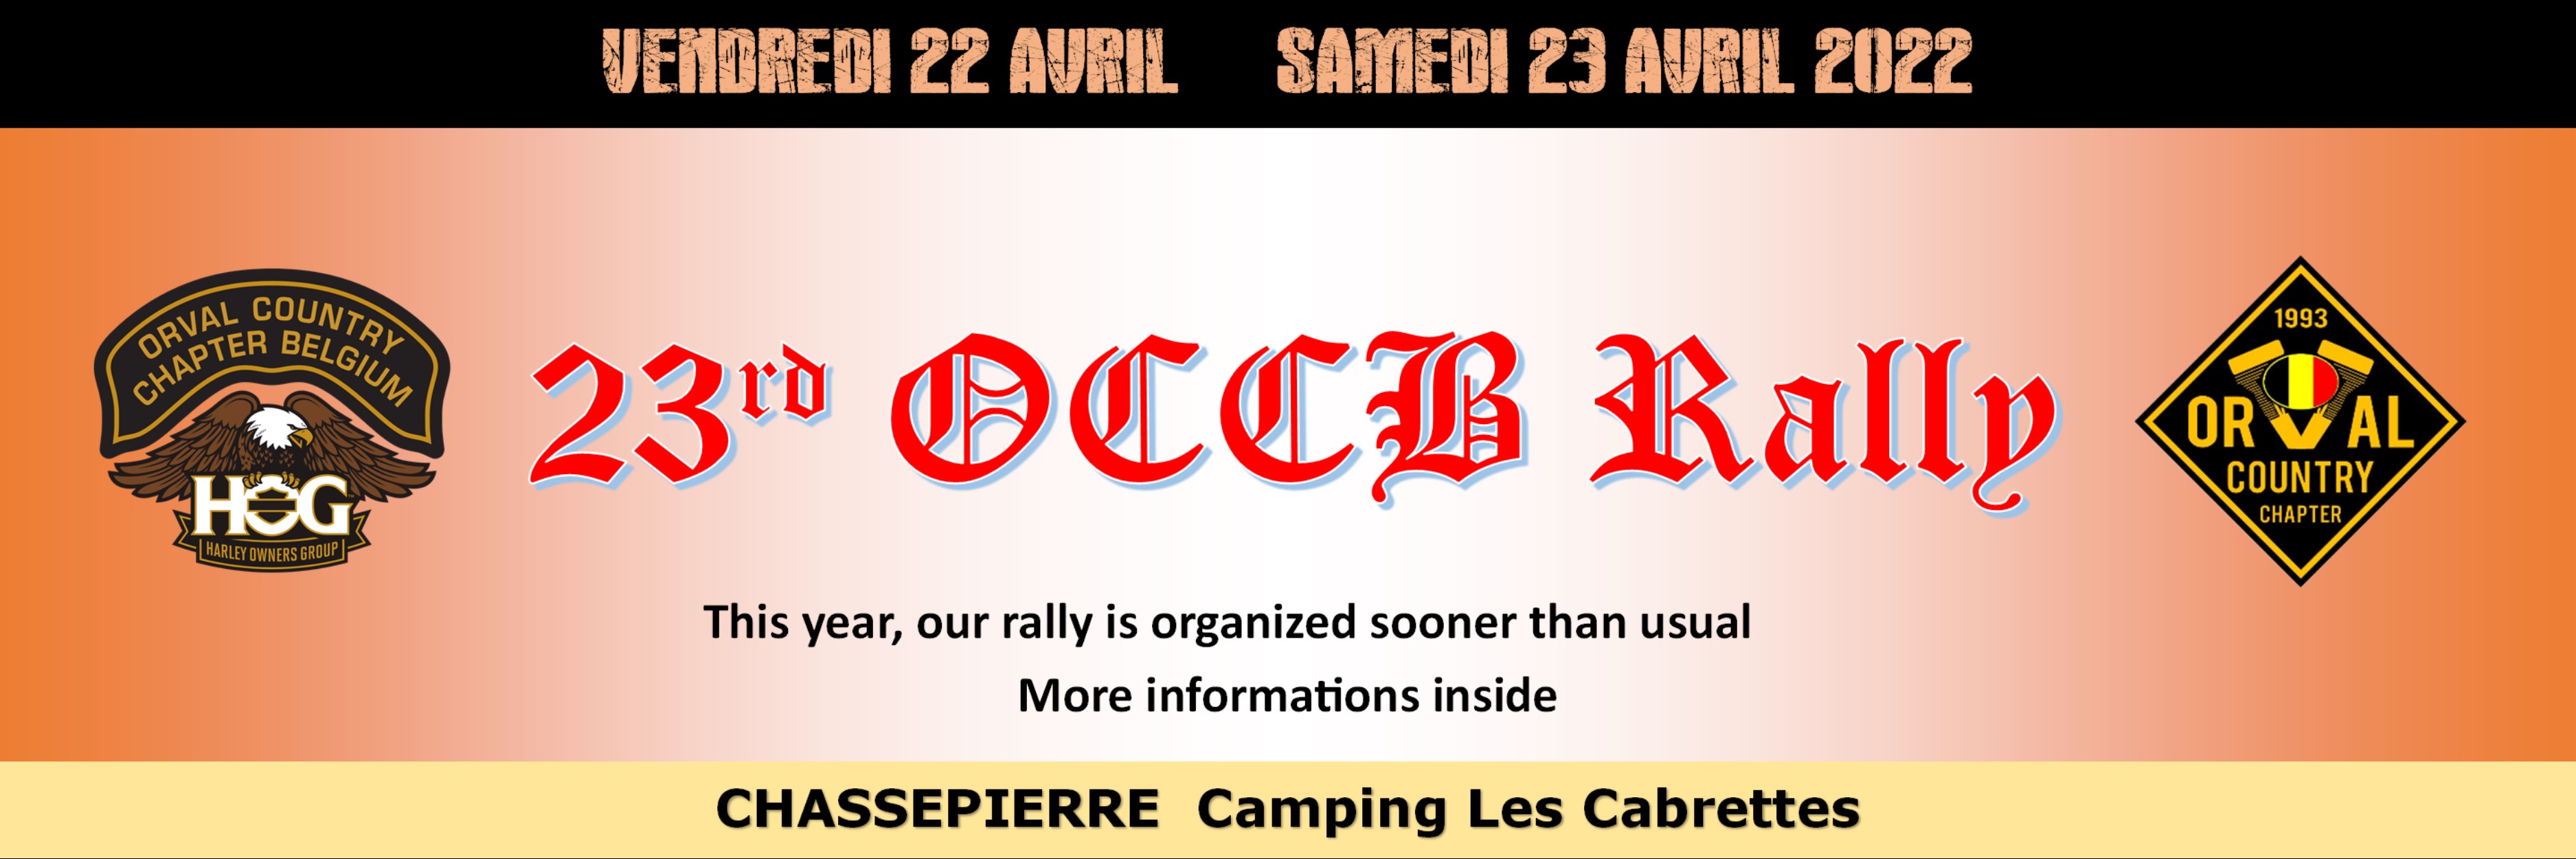 OCCB rally